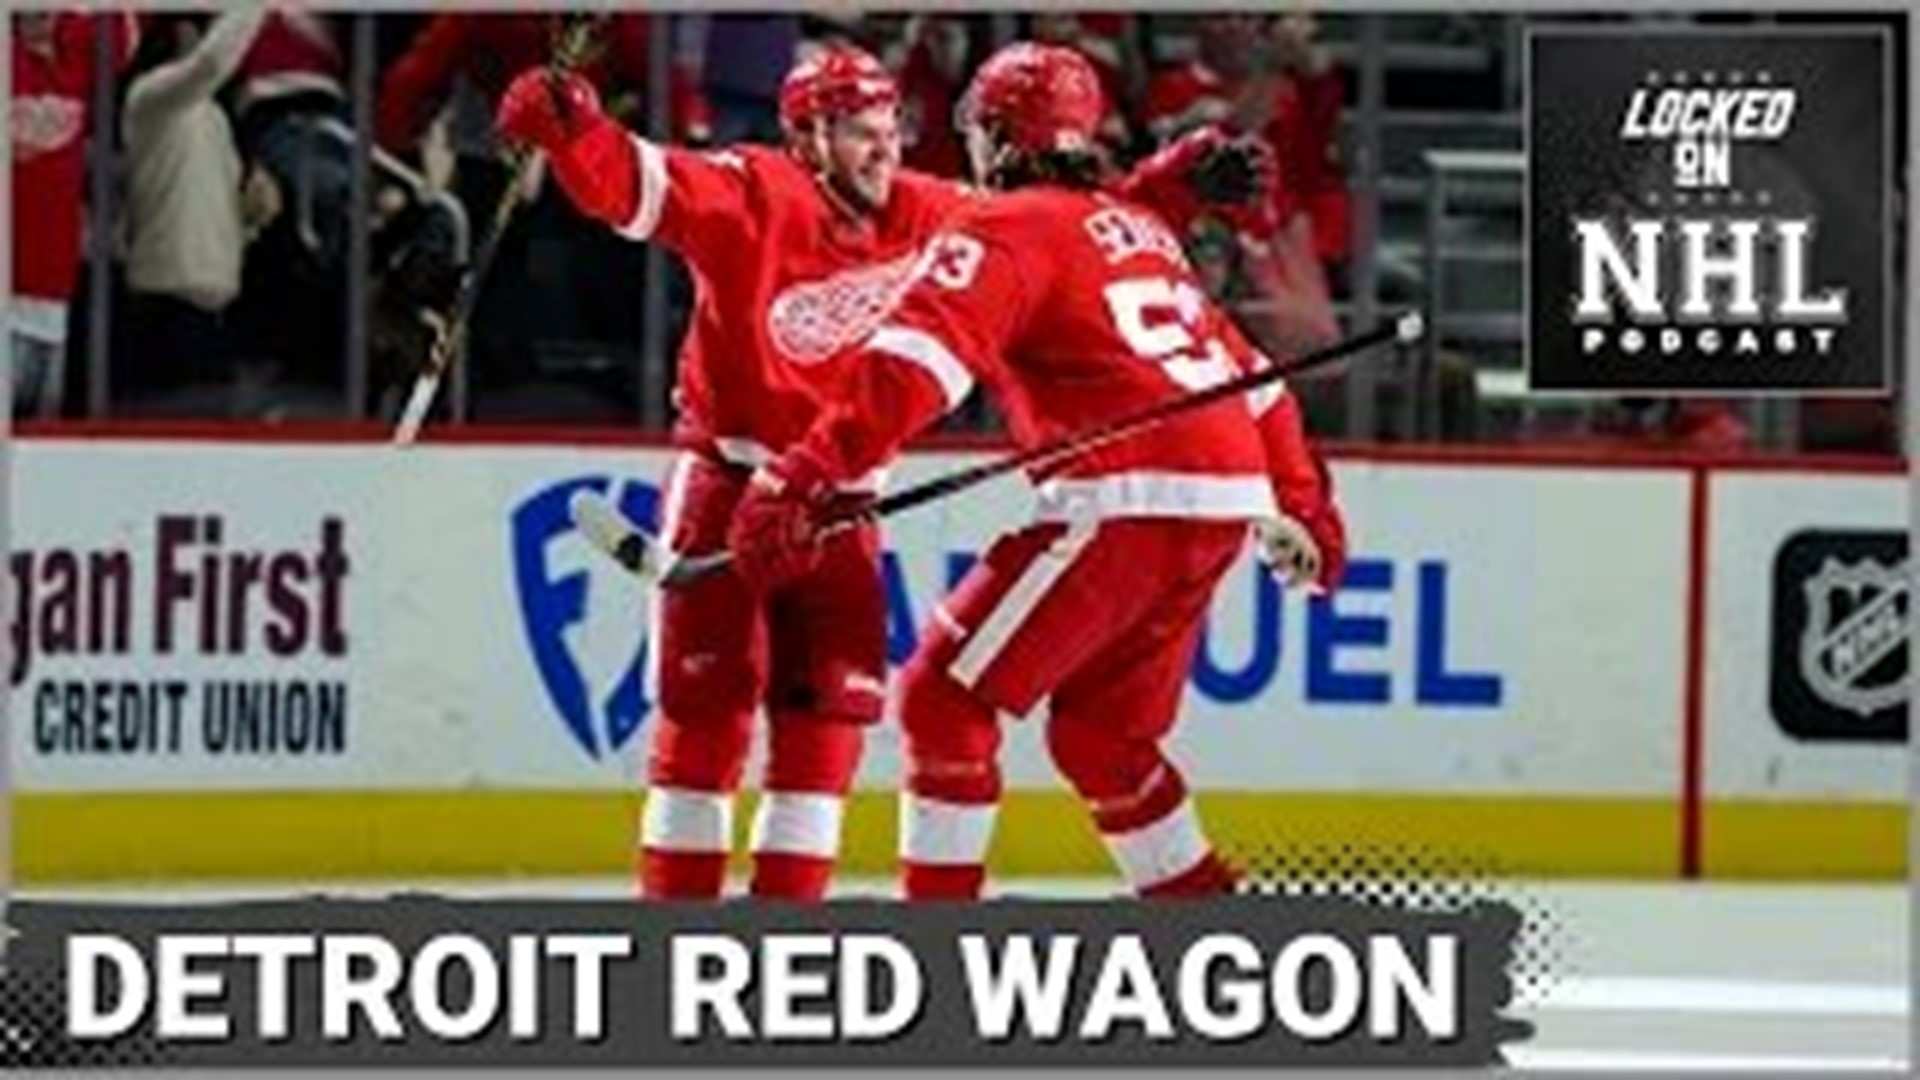 Detroit Red Wings, hockey, ice hockey, logo, nhl, red wings, HD wallpaper